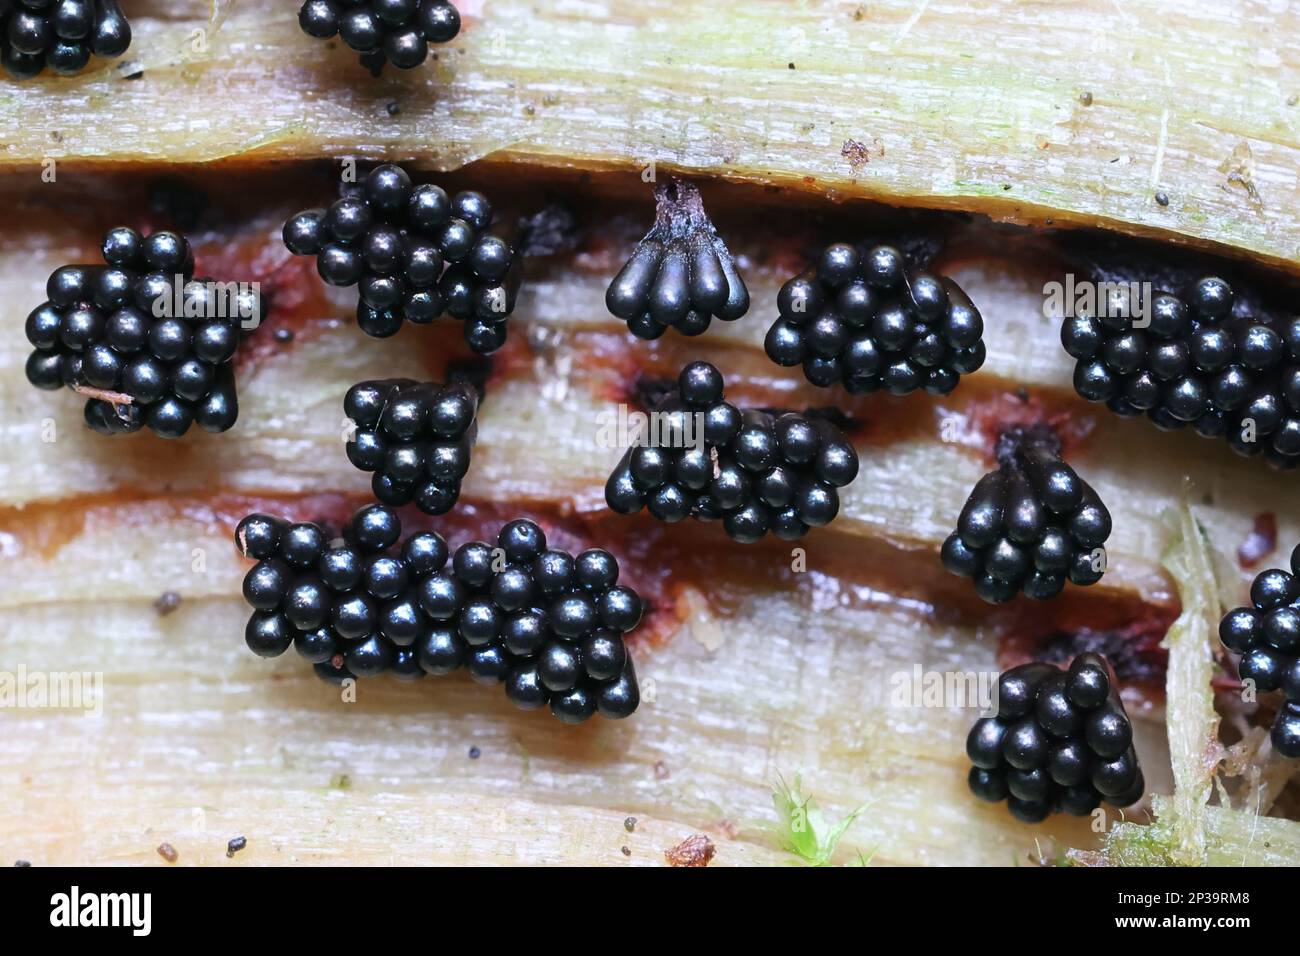 Metatrichia vesparium, commonly known as wasp nest slime mold, microscope image Stock Photo